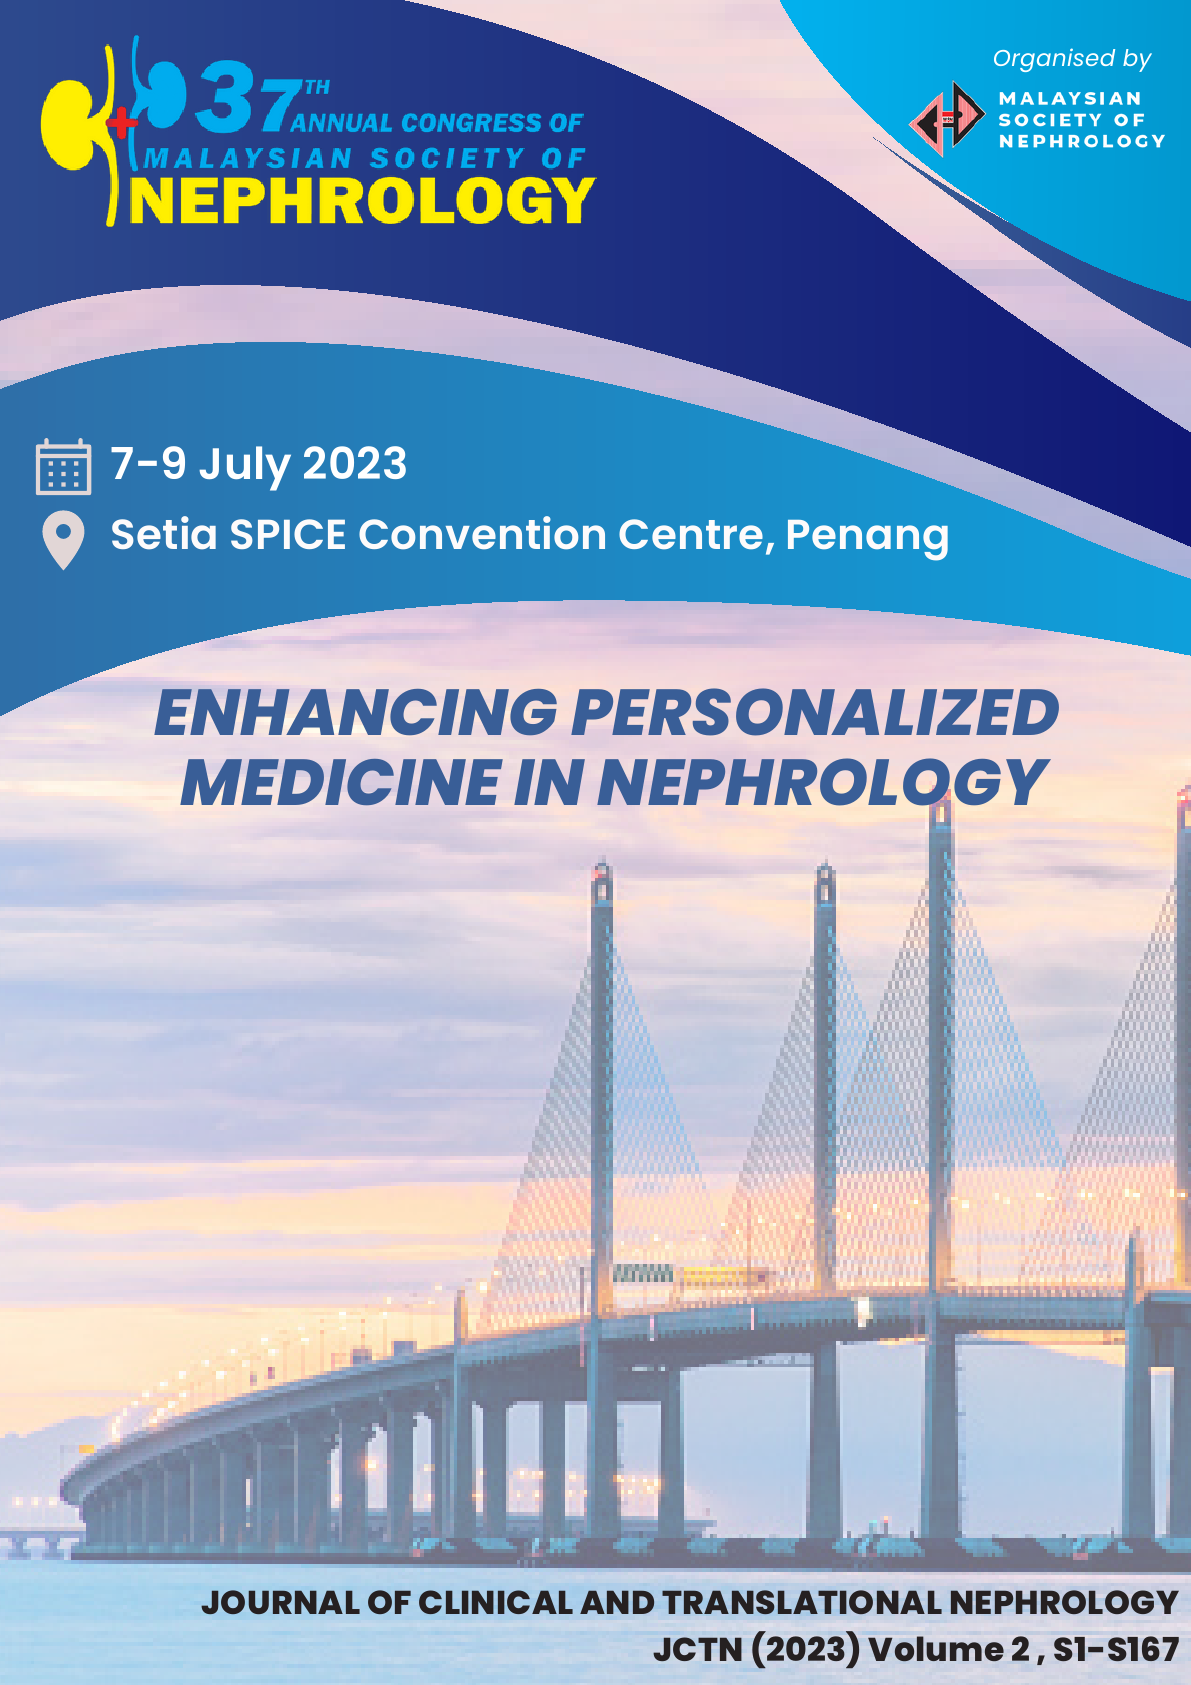 37th Annual Congress of Malaysian Society of Nephrology (MSN) 2023